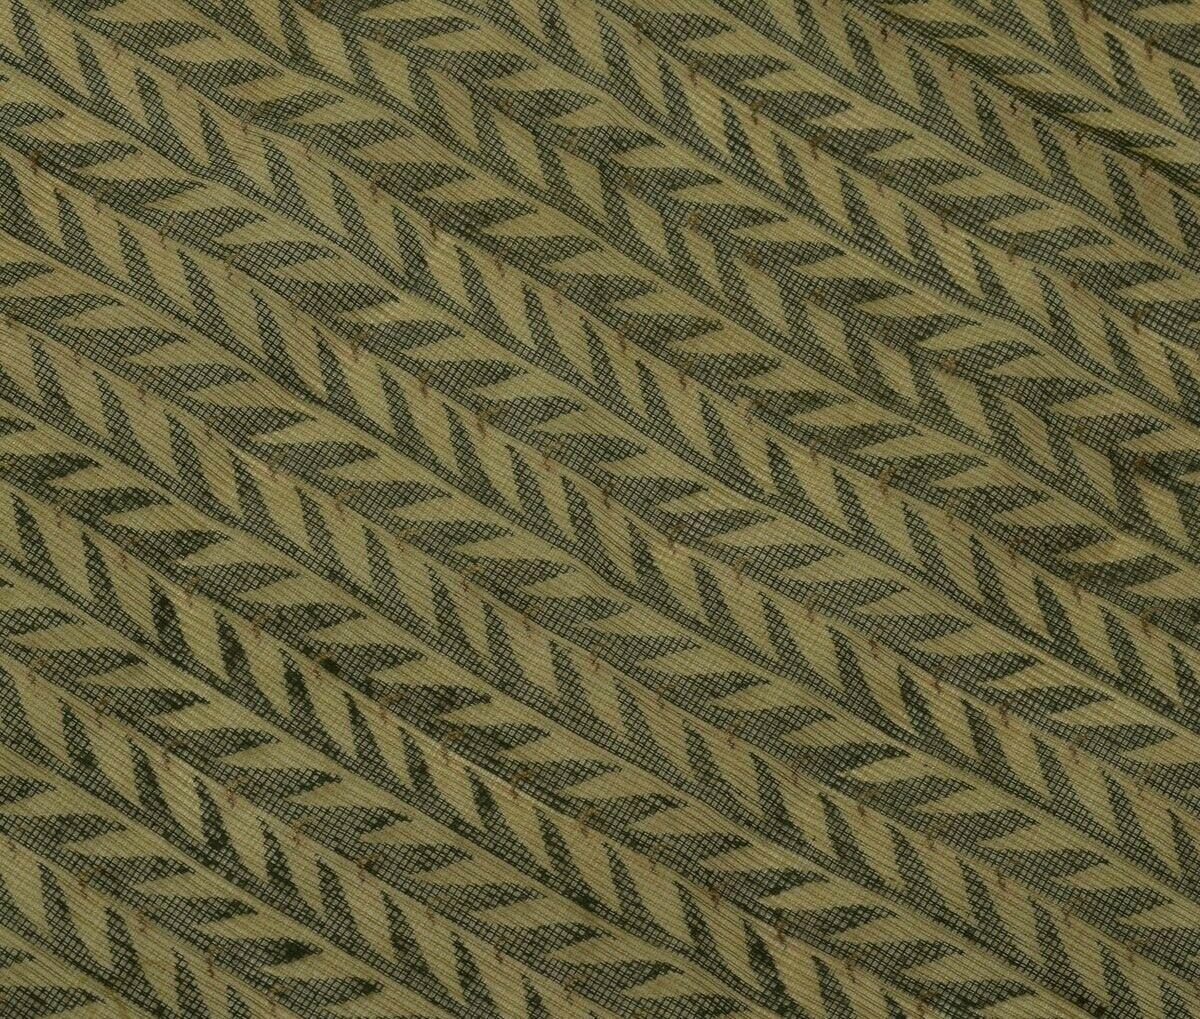 Vintage Sari Remnant Printed Scrap Supernet Fabric for Sewing Craft Green